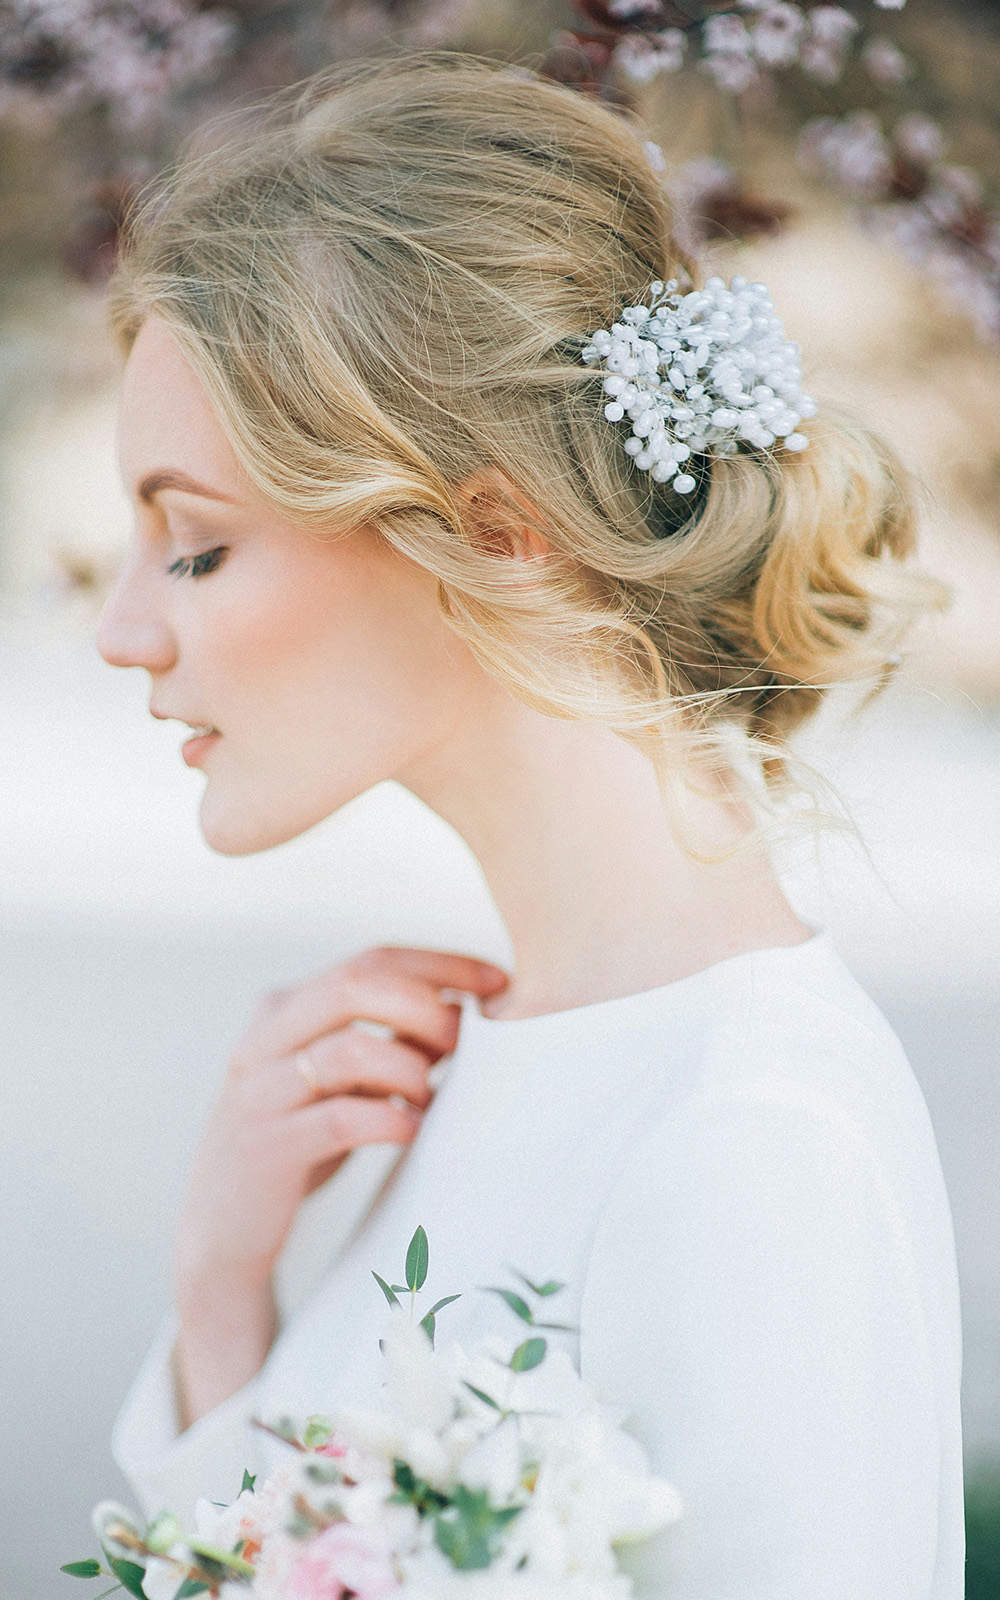 Find The Perfect Wedding Hairstyle - Weddingchicks